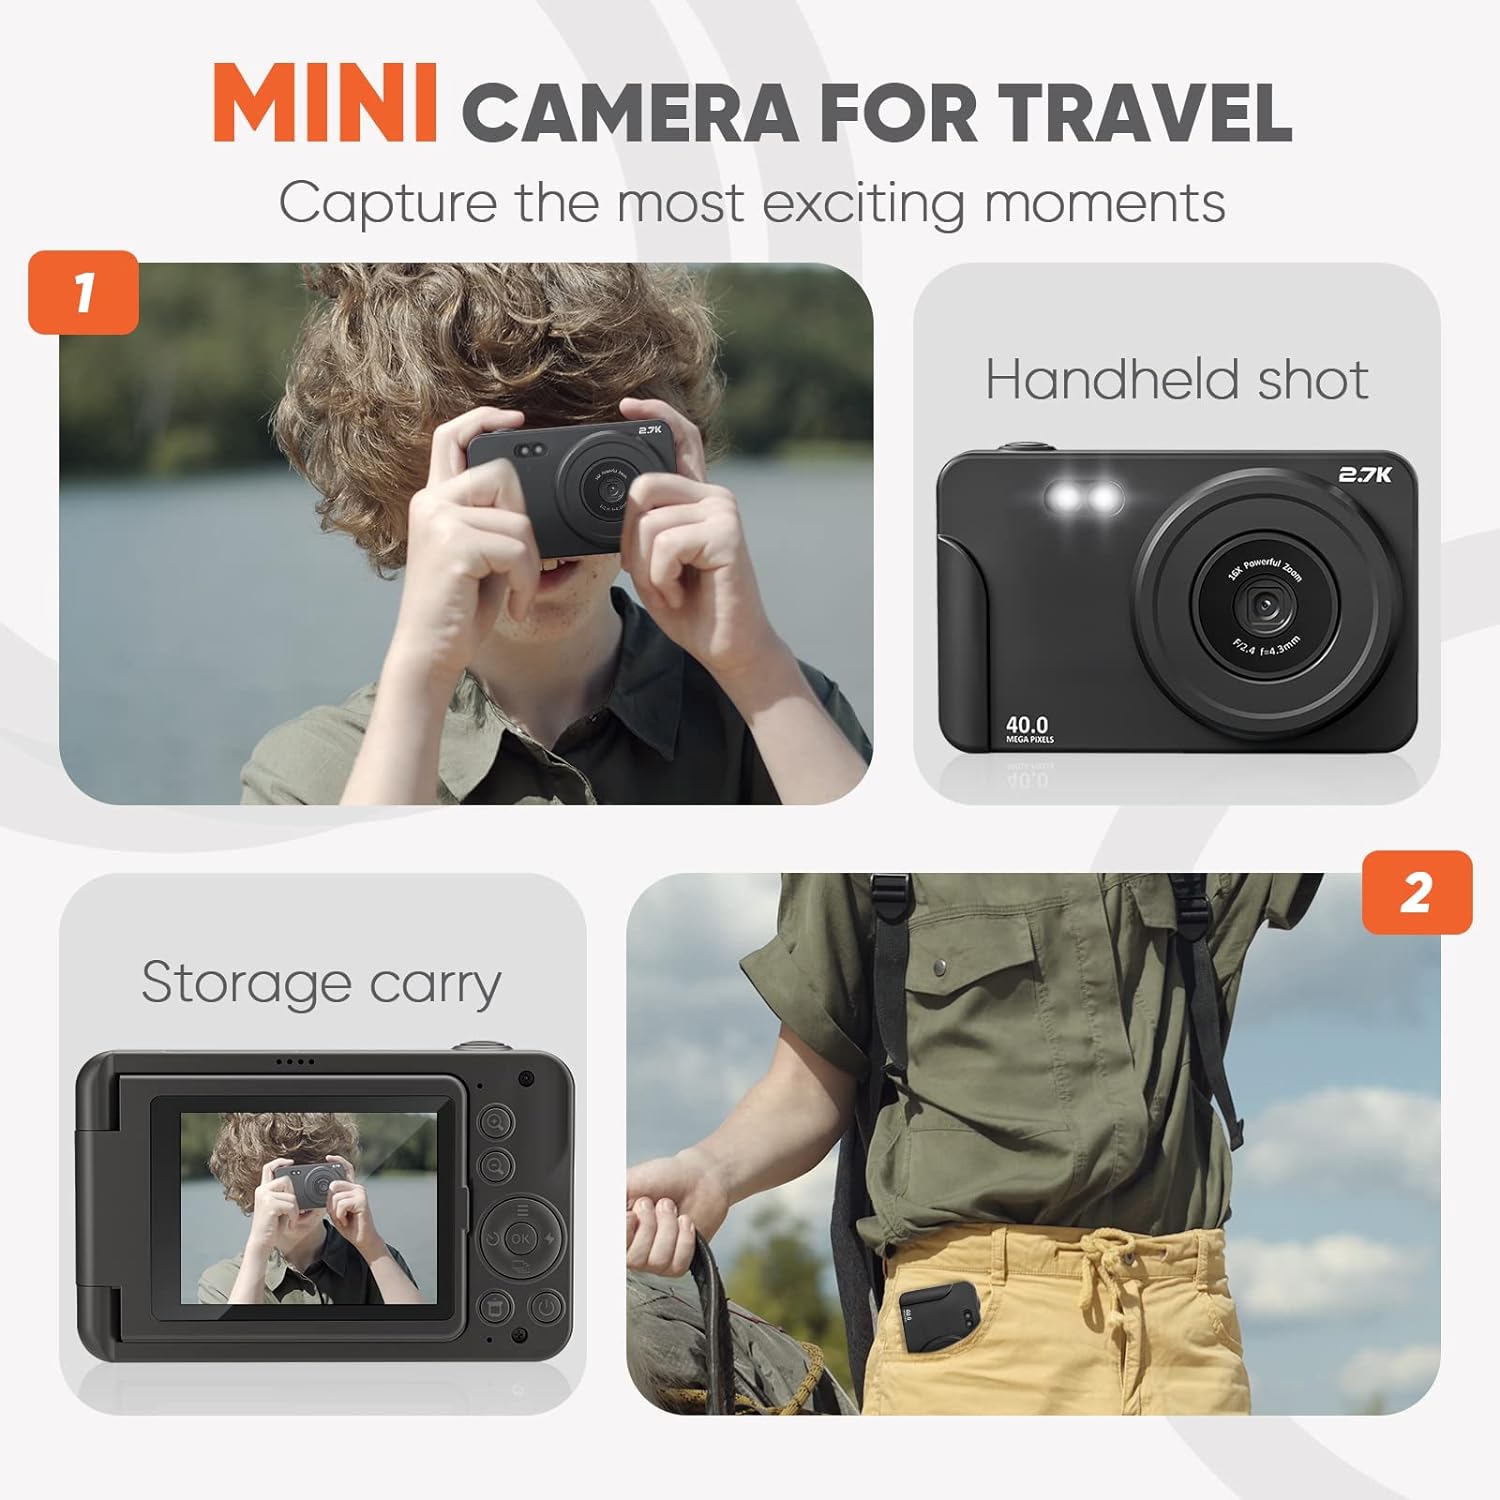 ESOXOFFORE Digital Camera for Teens - $30